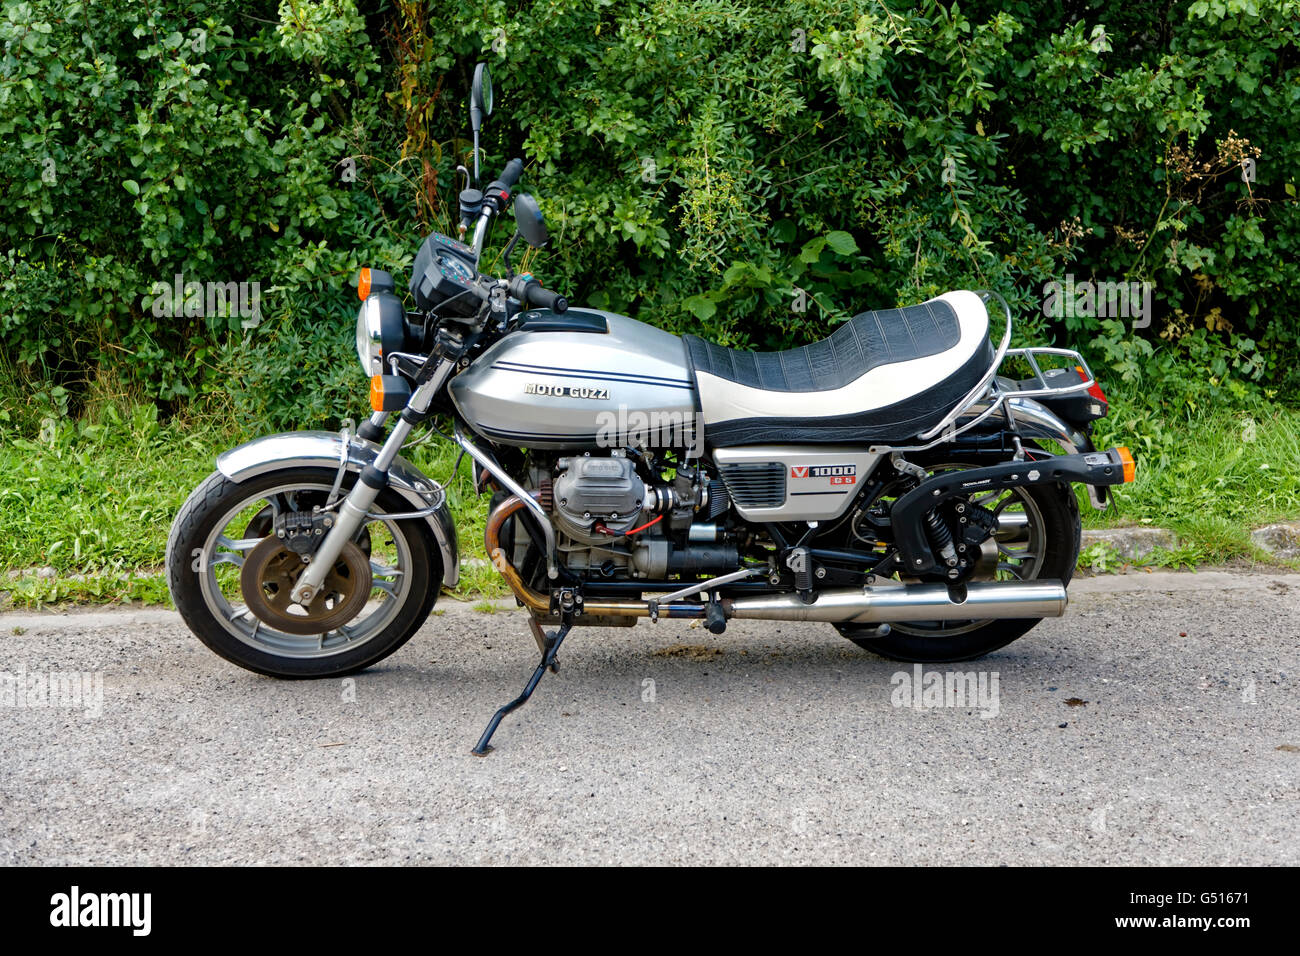 Moto guzzi v1000 g5 hi-res stock photography and images - Alamy